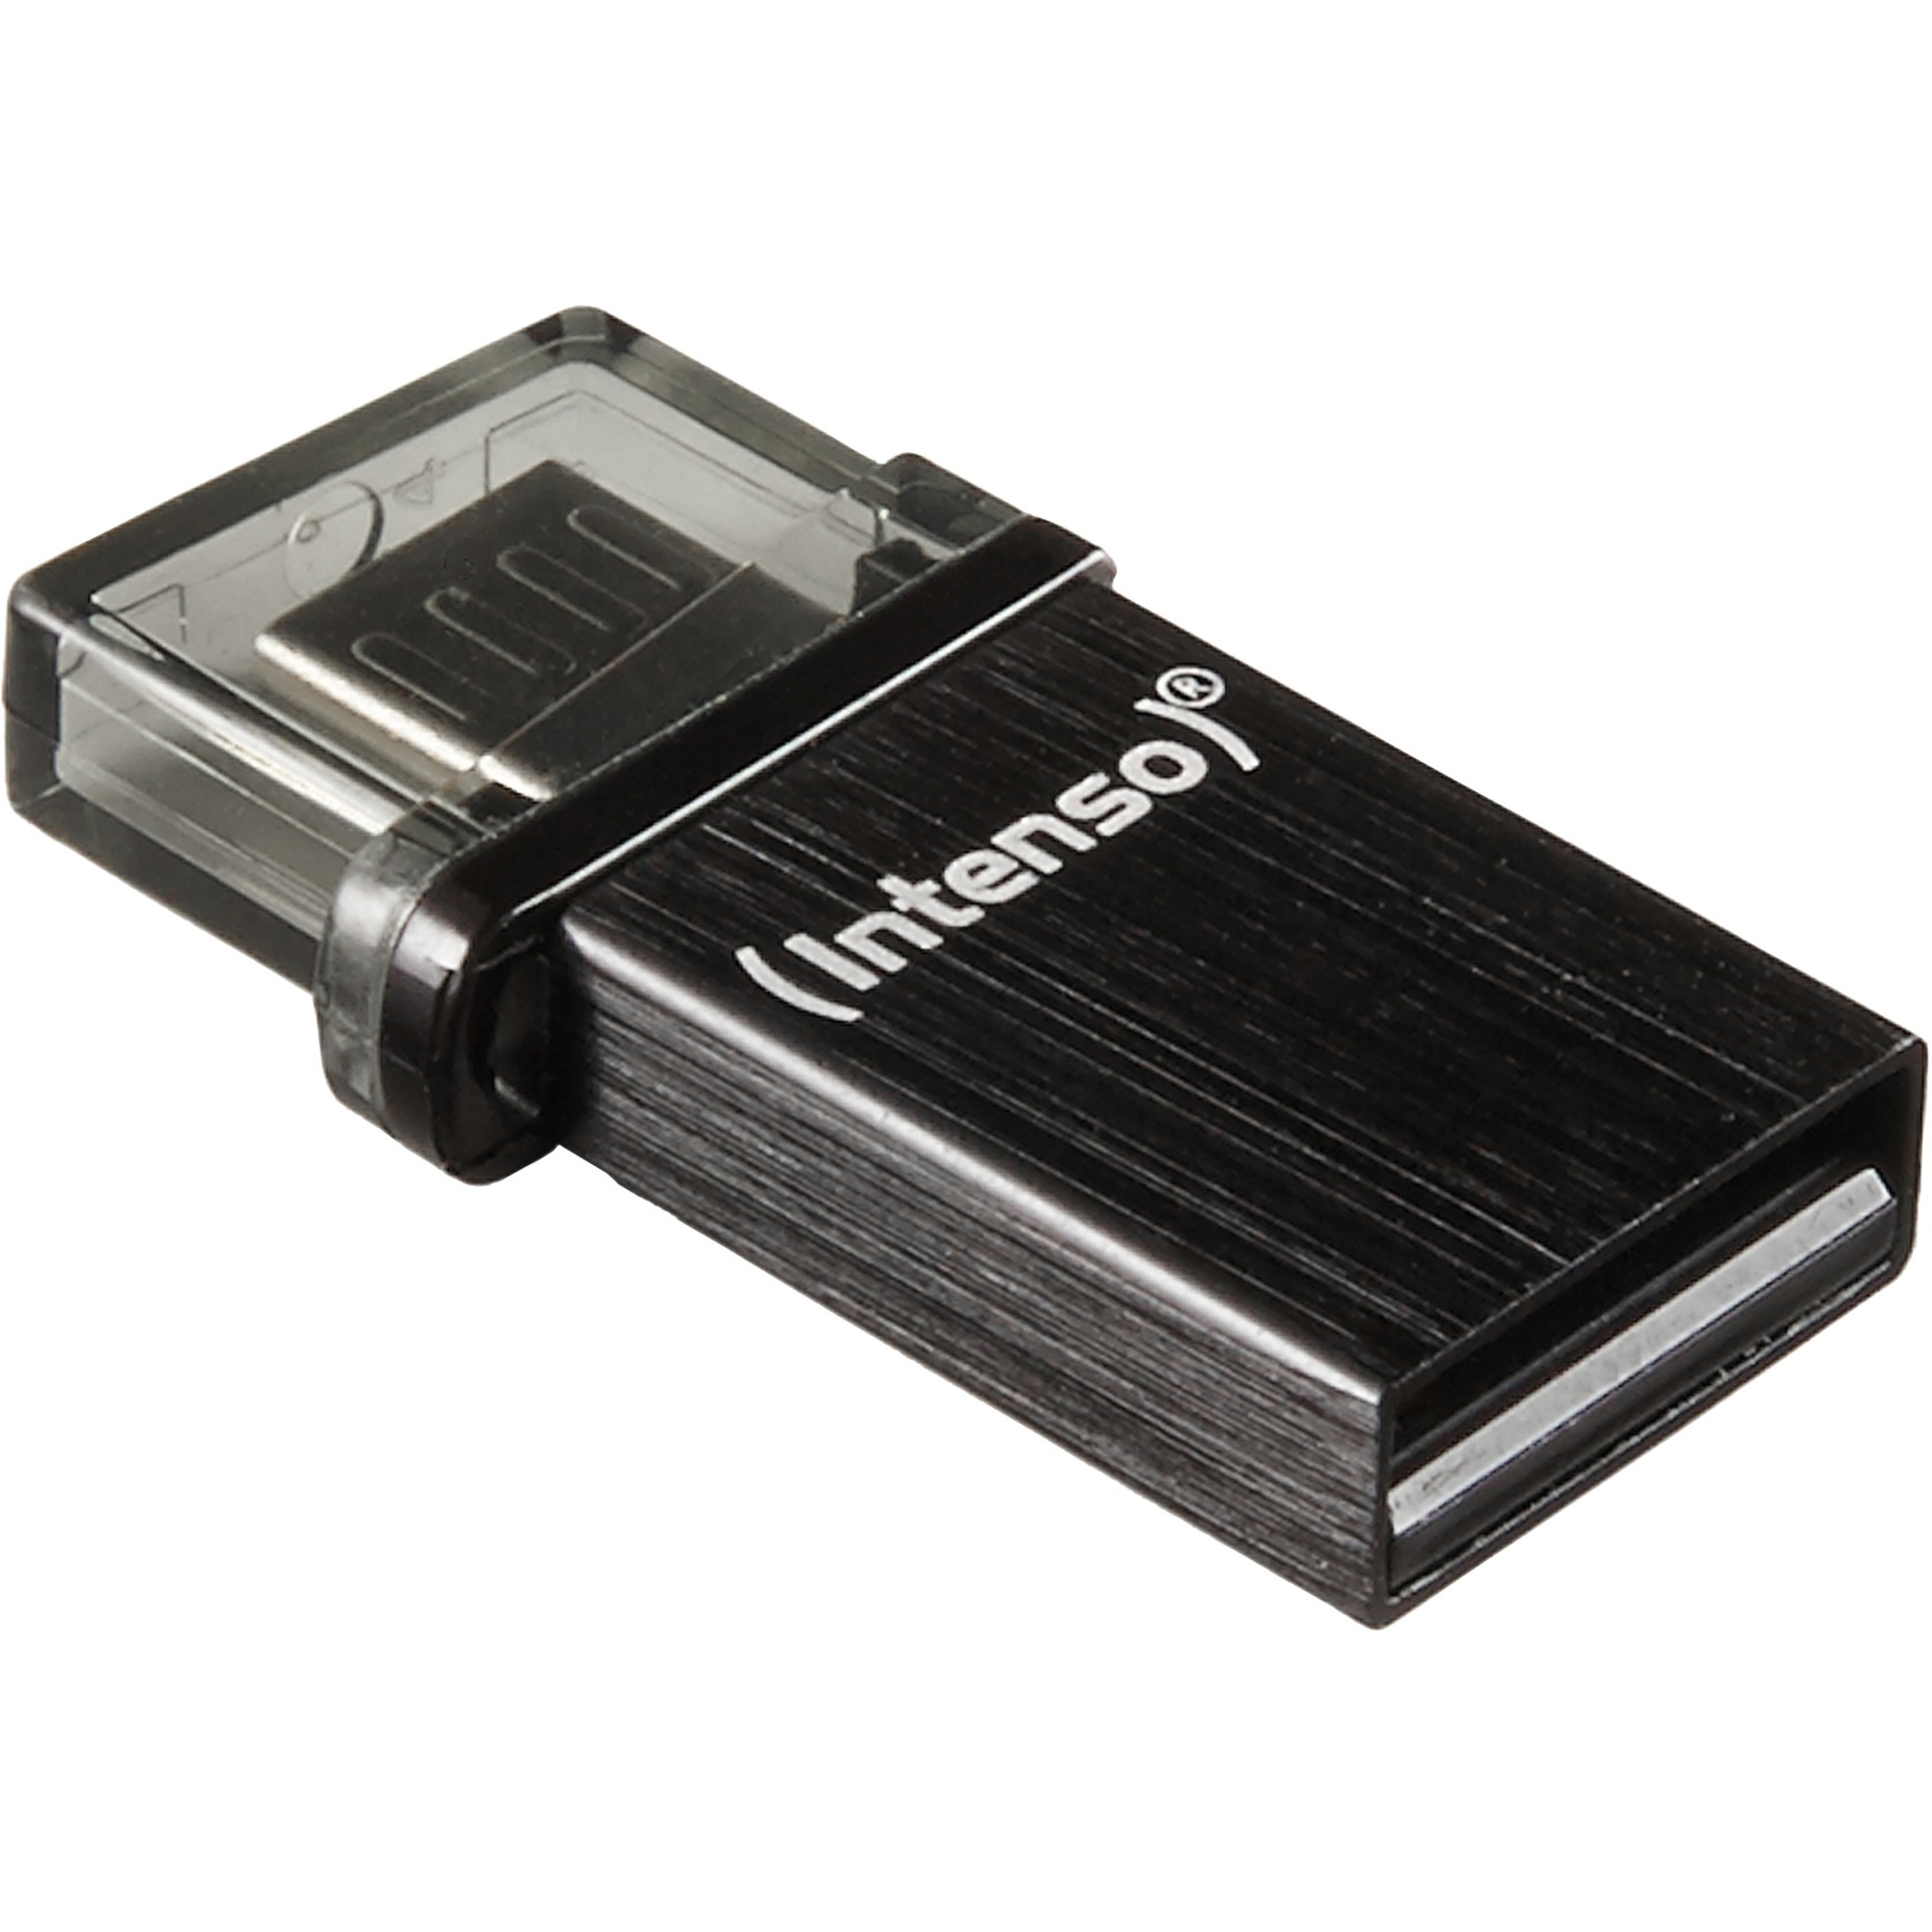 Image of Alternate - 16GB Mini MOBILE LINE, USB-Stick online einkaufen bei Alternate